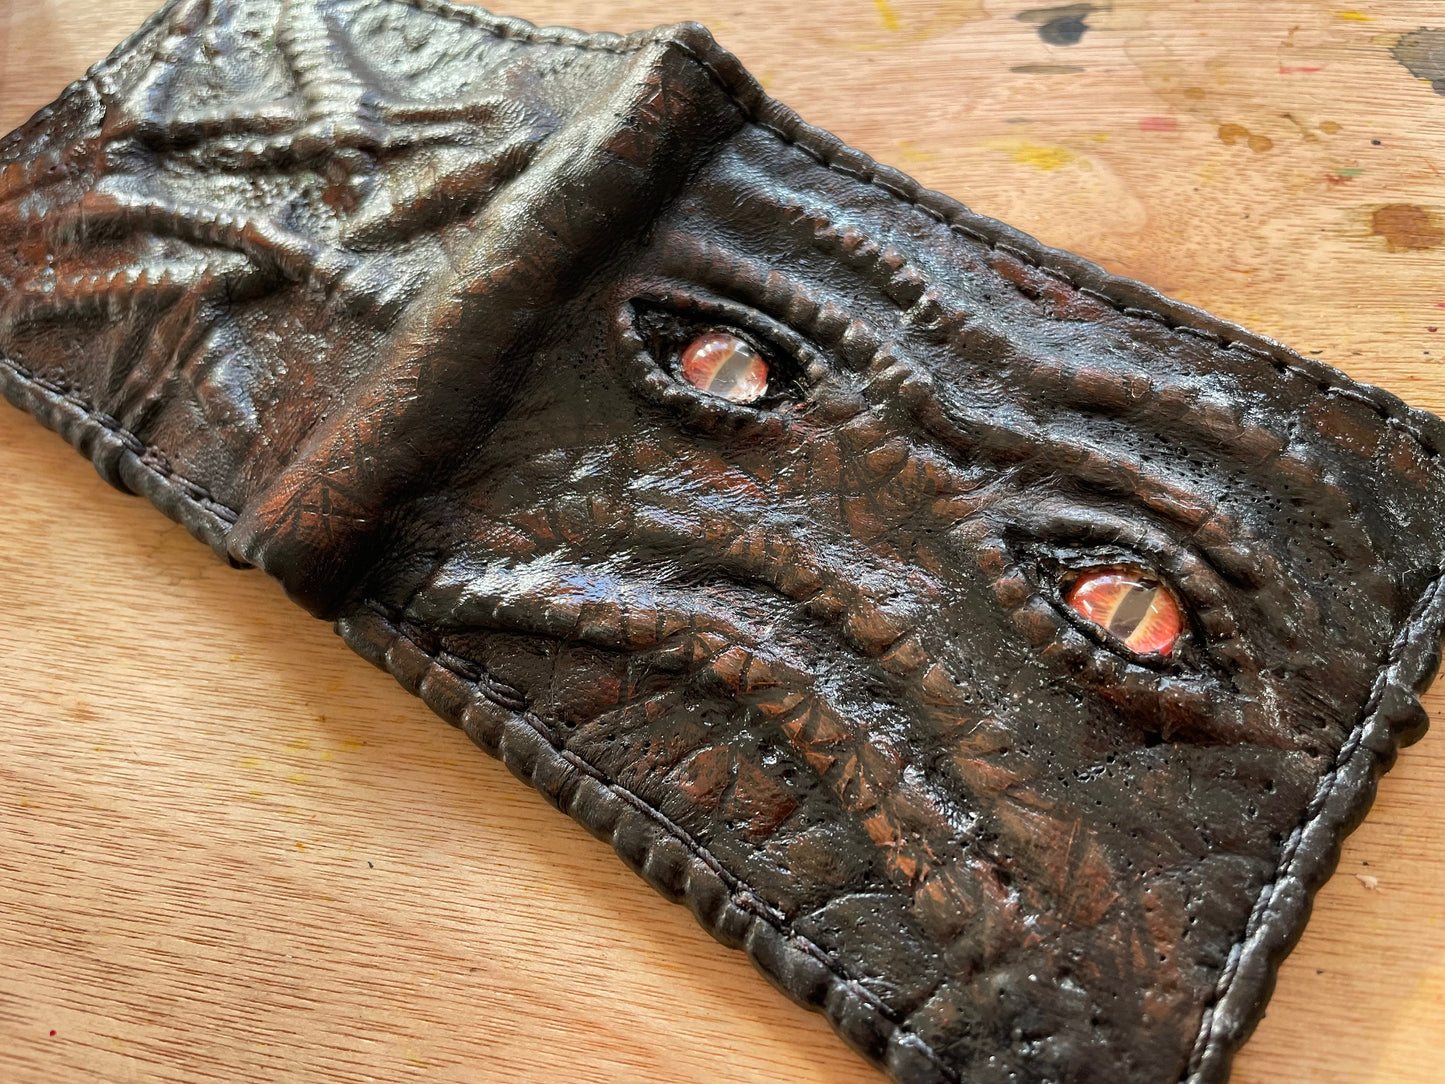 Enderman Eyes bumpy version - Necromonicon - demon eyes - Leather wallet.